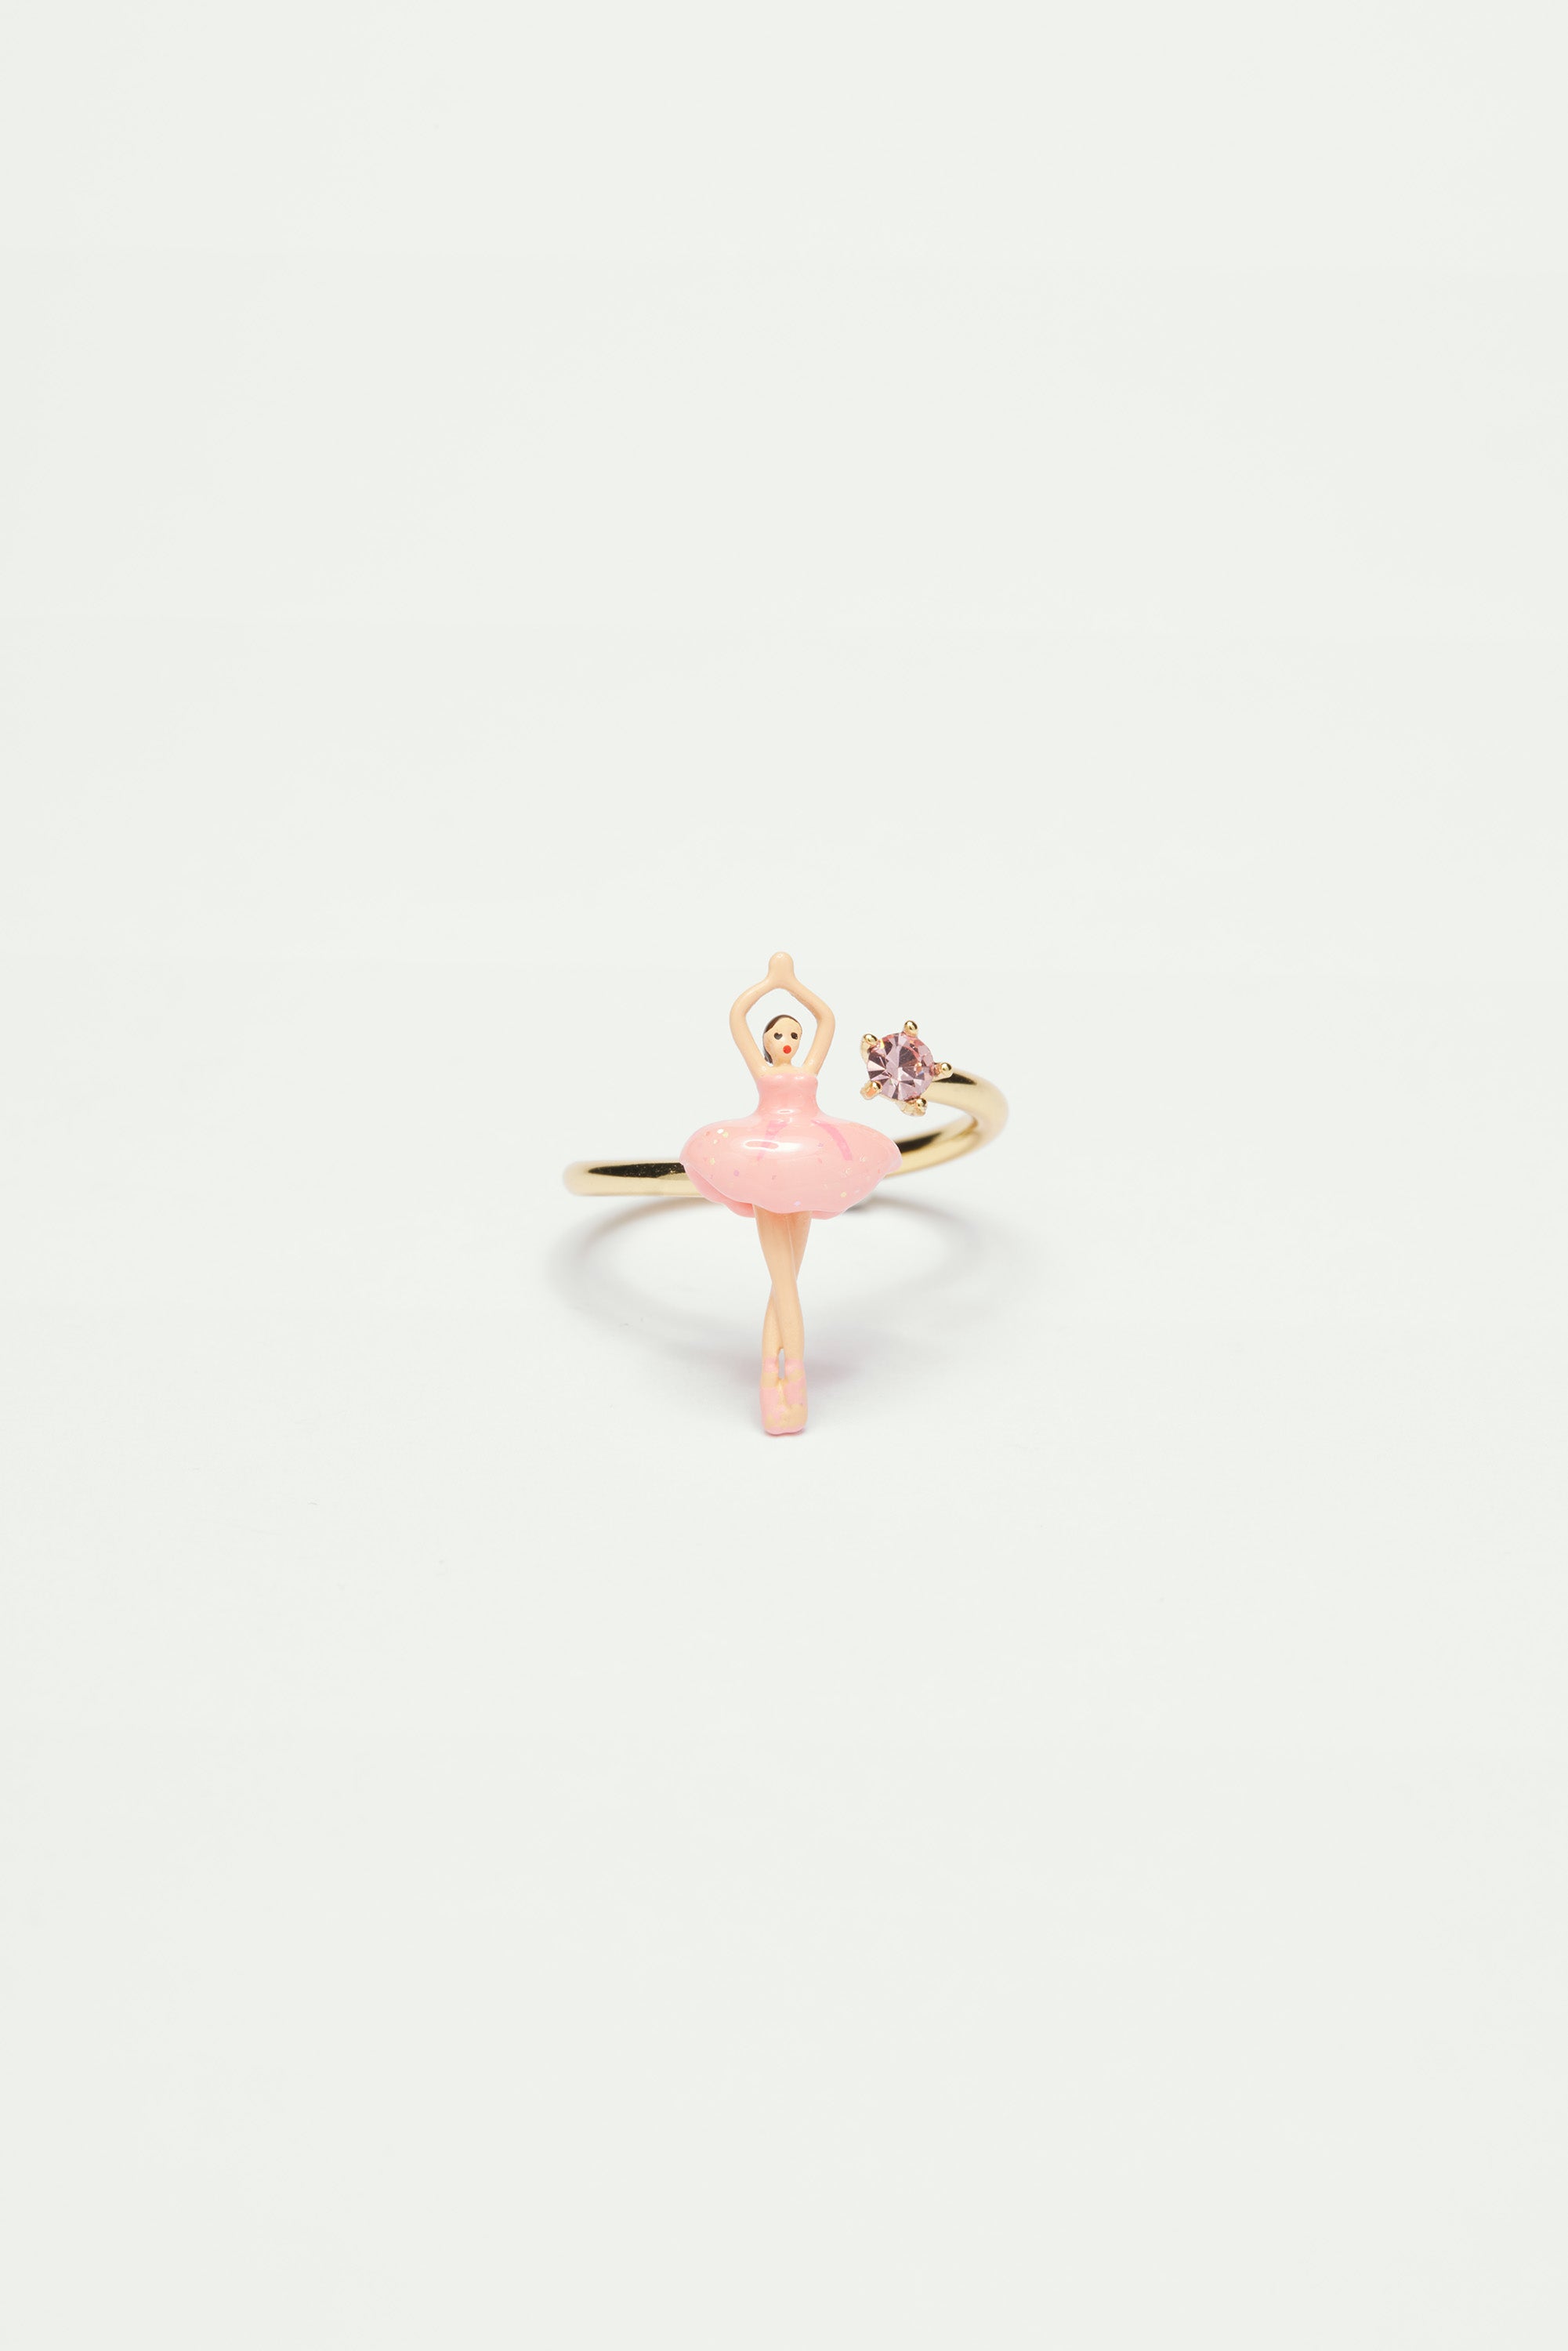 Anillo regulable mini bailarina con tutú rosa